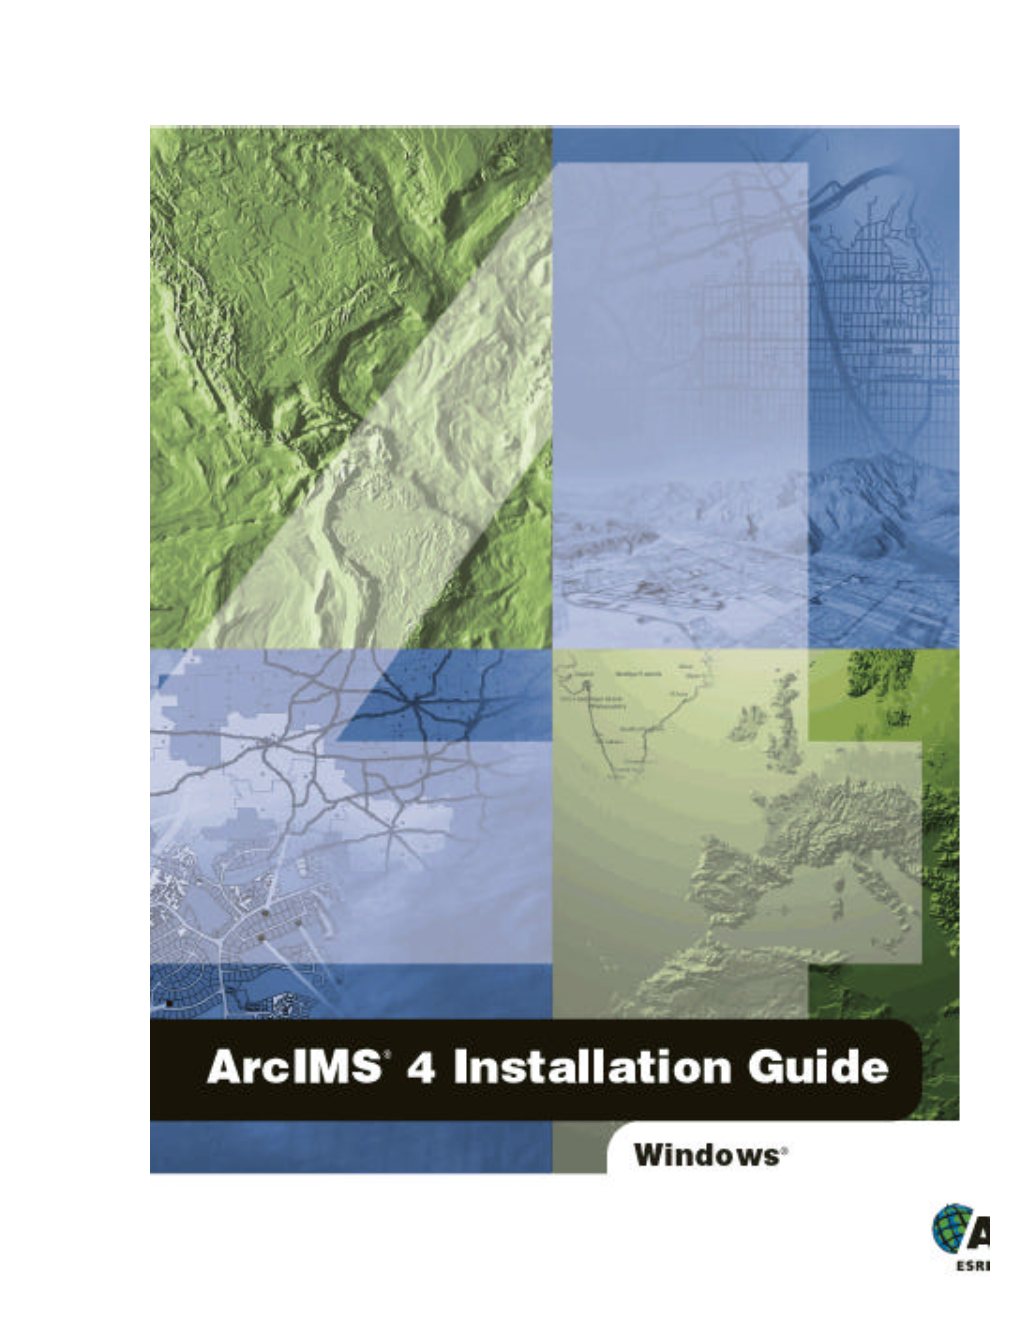 Arcims 4 Installation Guide: Windows